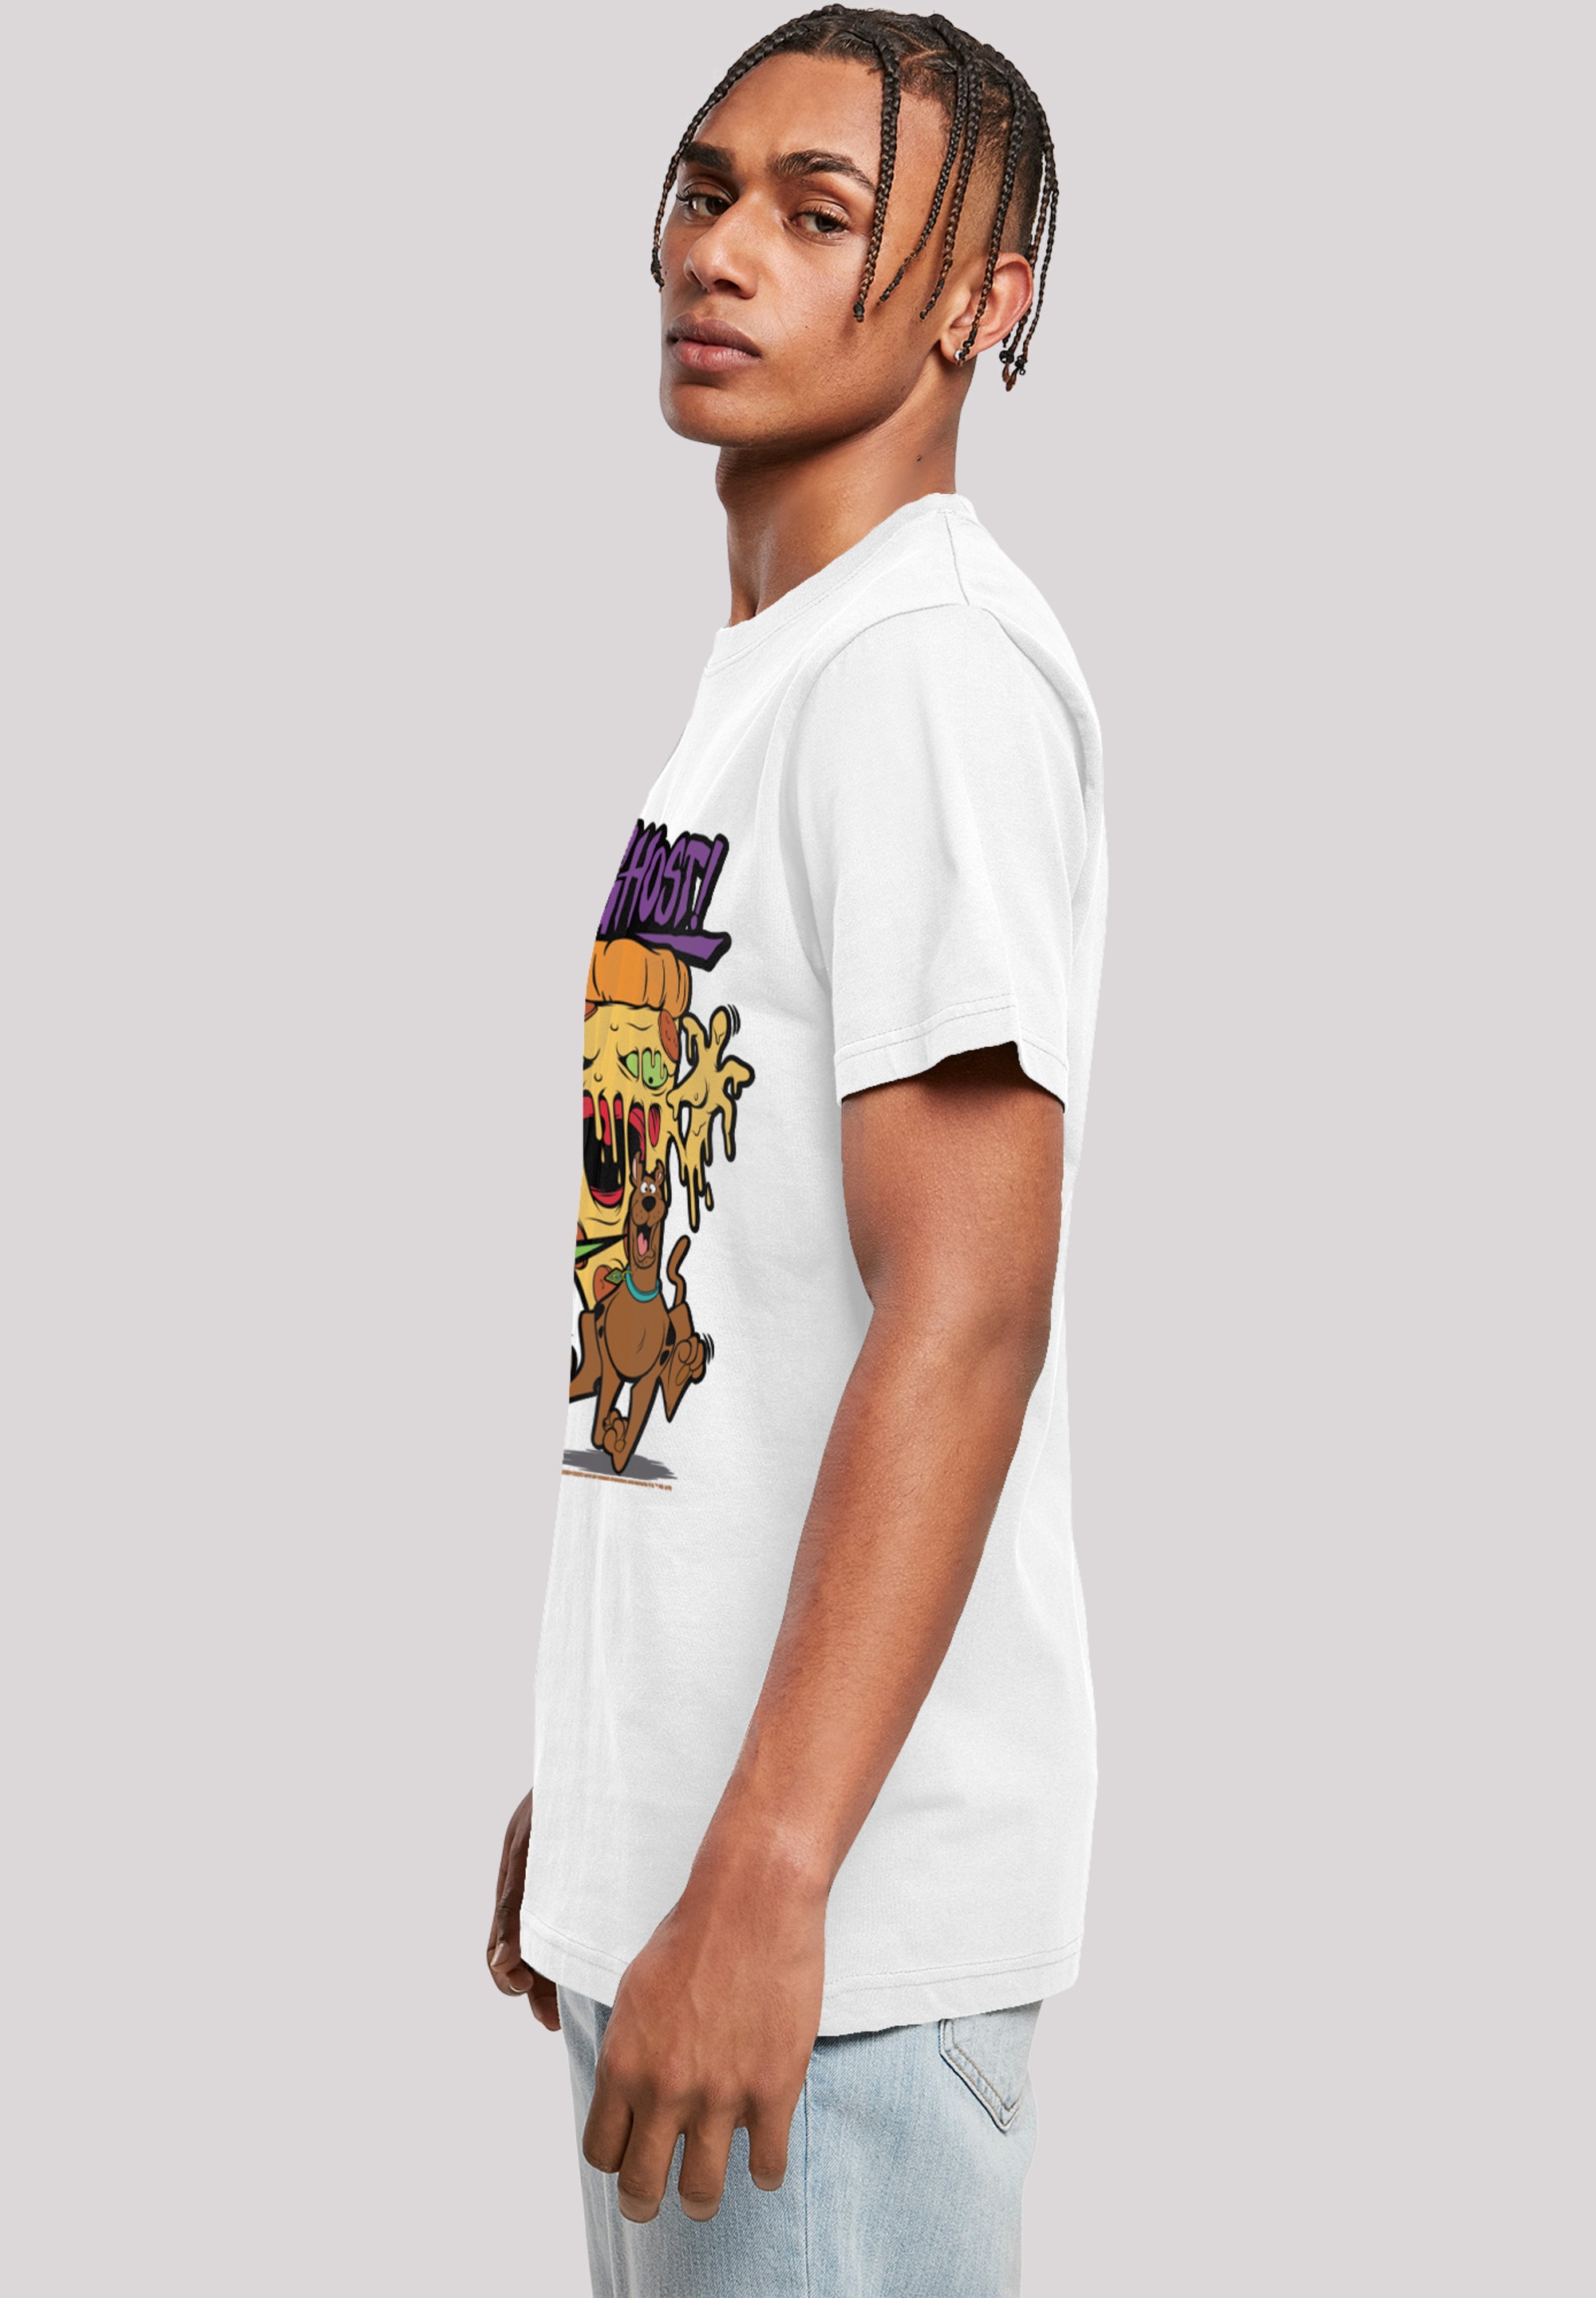 F4NT4STIC T-Shirt »Scooby Doo Pizza Ghost Geist«, Herren,Premium Merch,Regular-Fit,Basic,Bedruckt